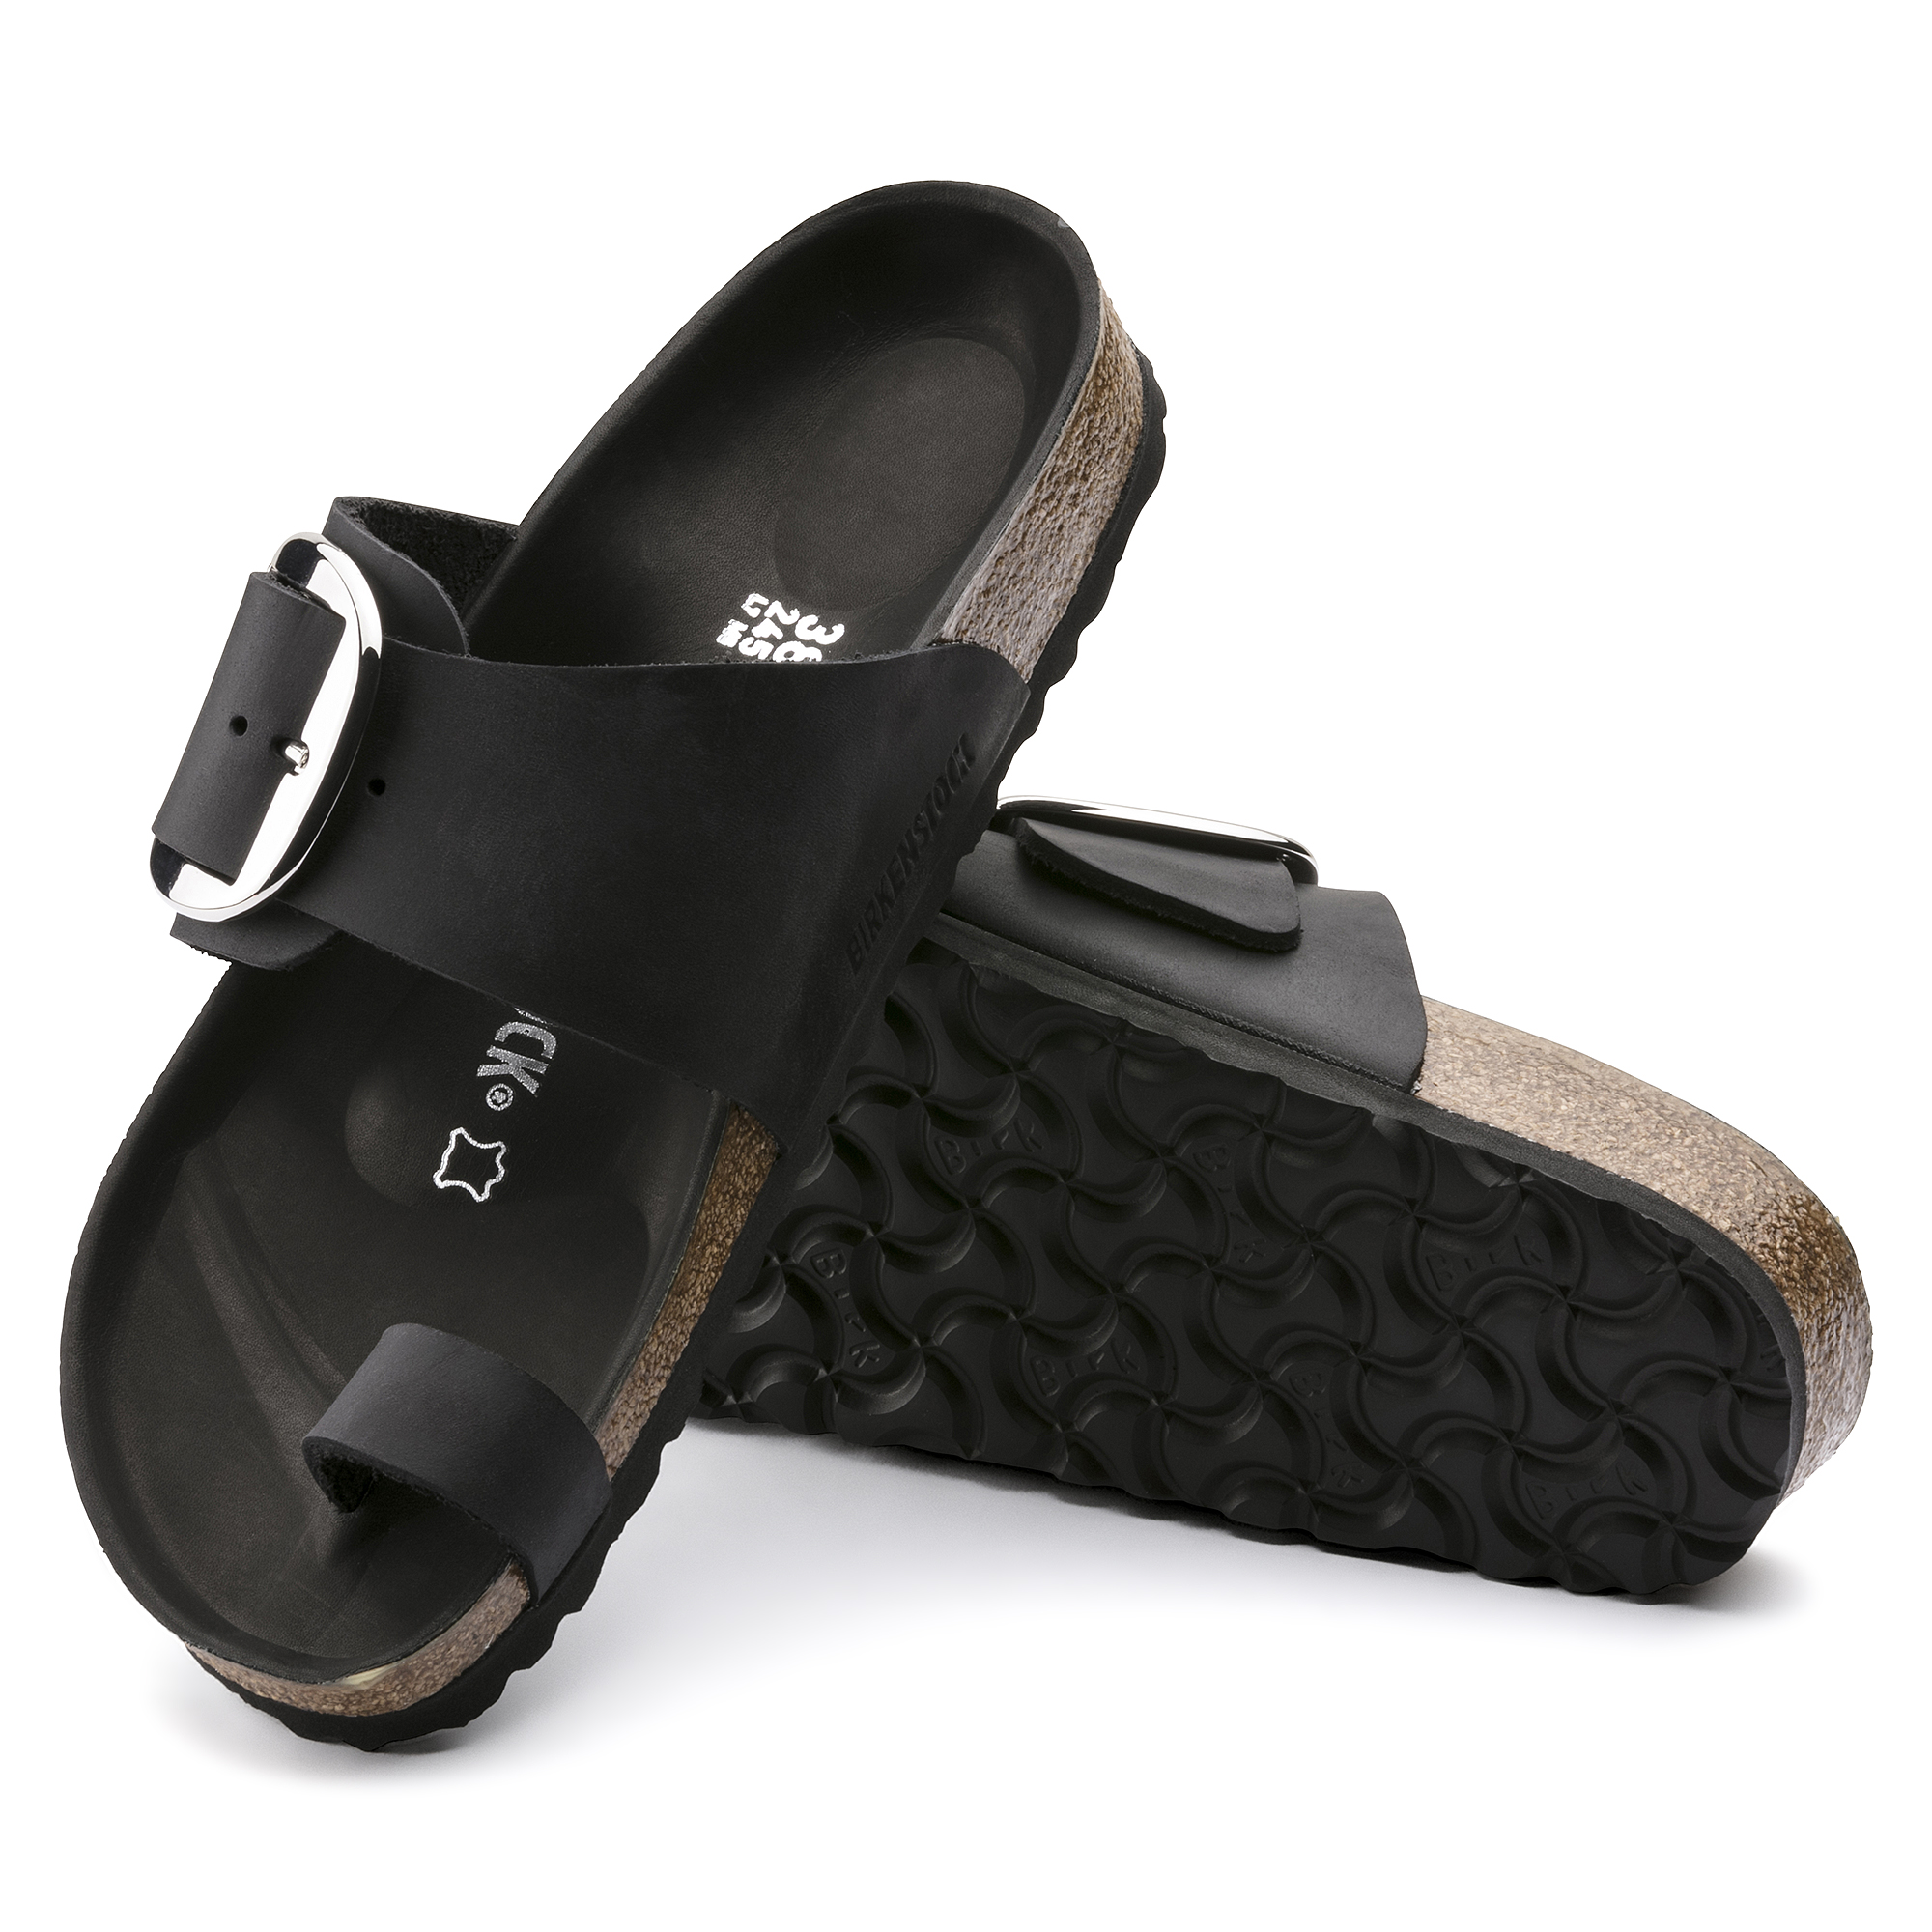 Leather sandals Birkenstock Camel size 38 EU in Leather - 37443851